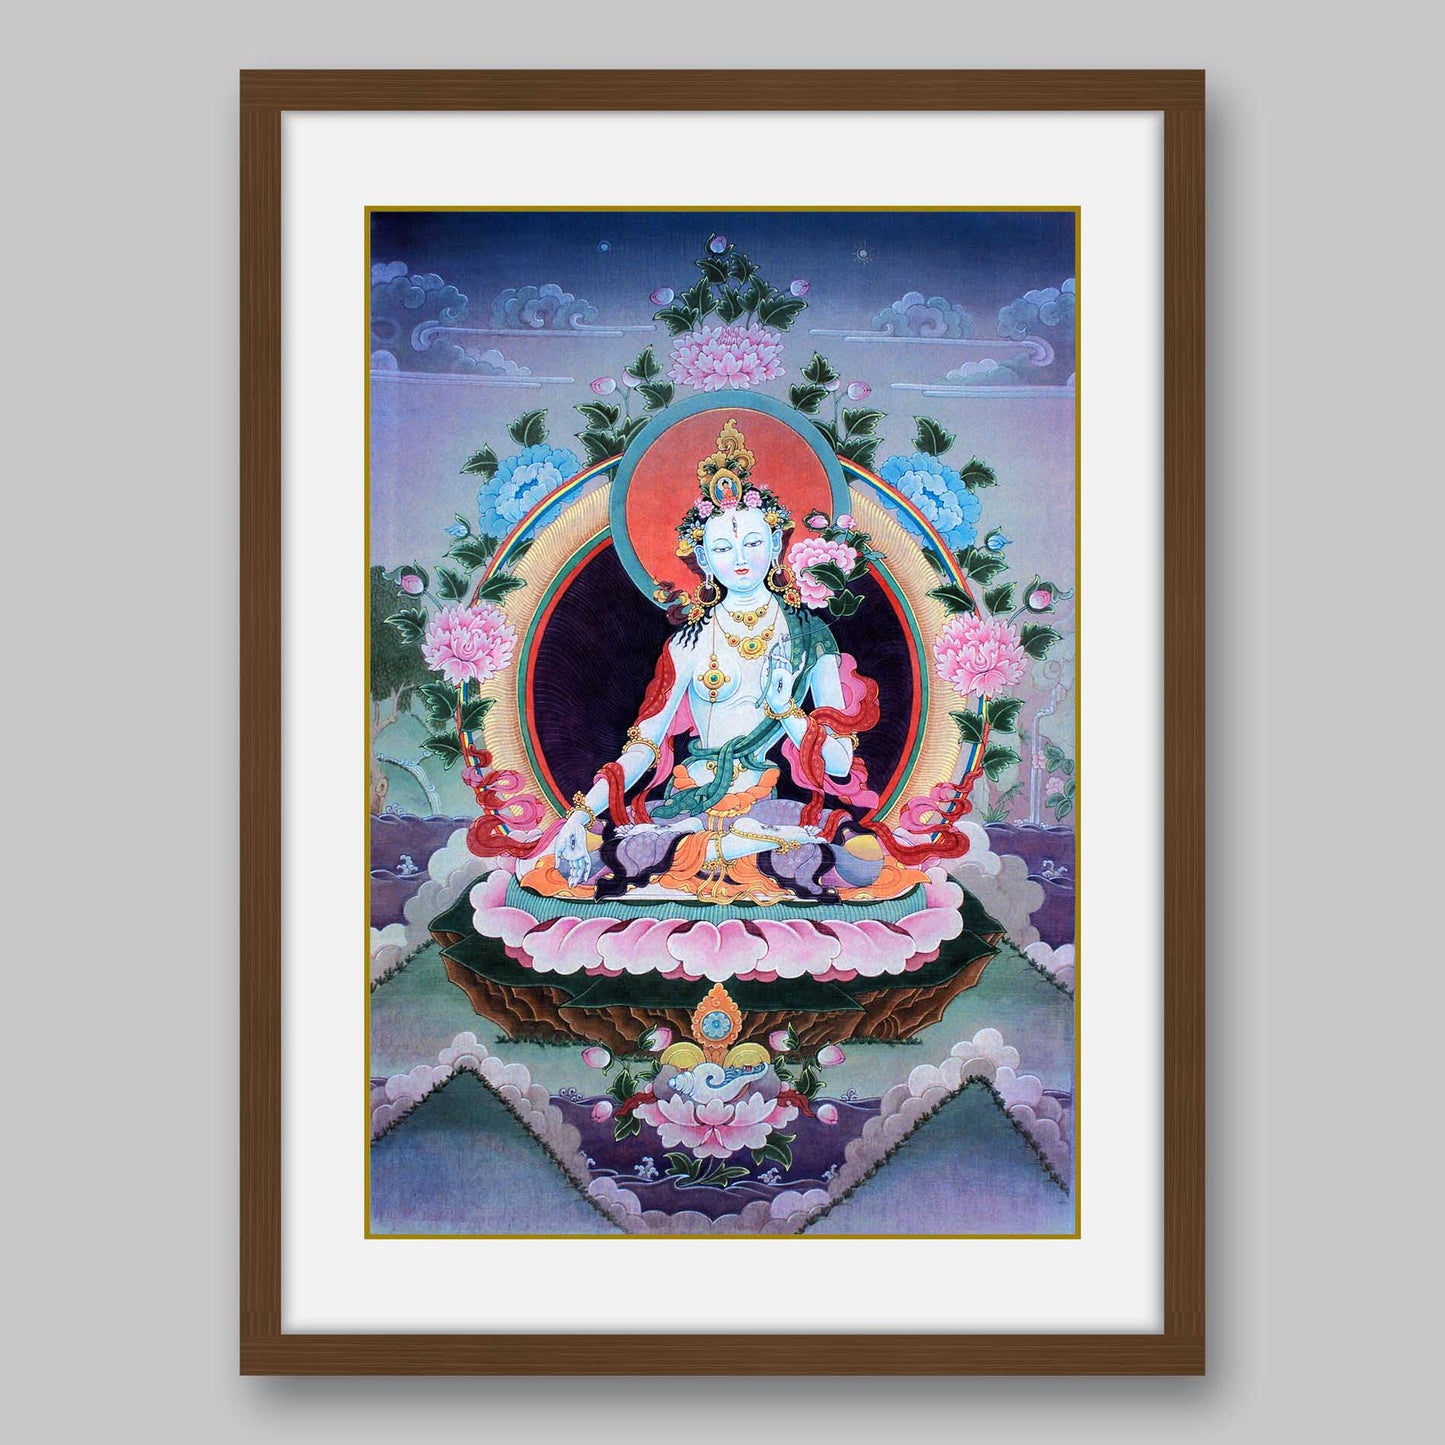 White Tara – The Female Boddhisatva and Bestower of Longevity - High Quality Print of Artwork by Pieter Weltevrede